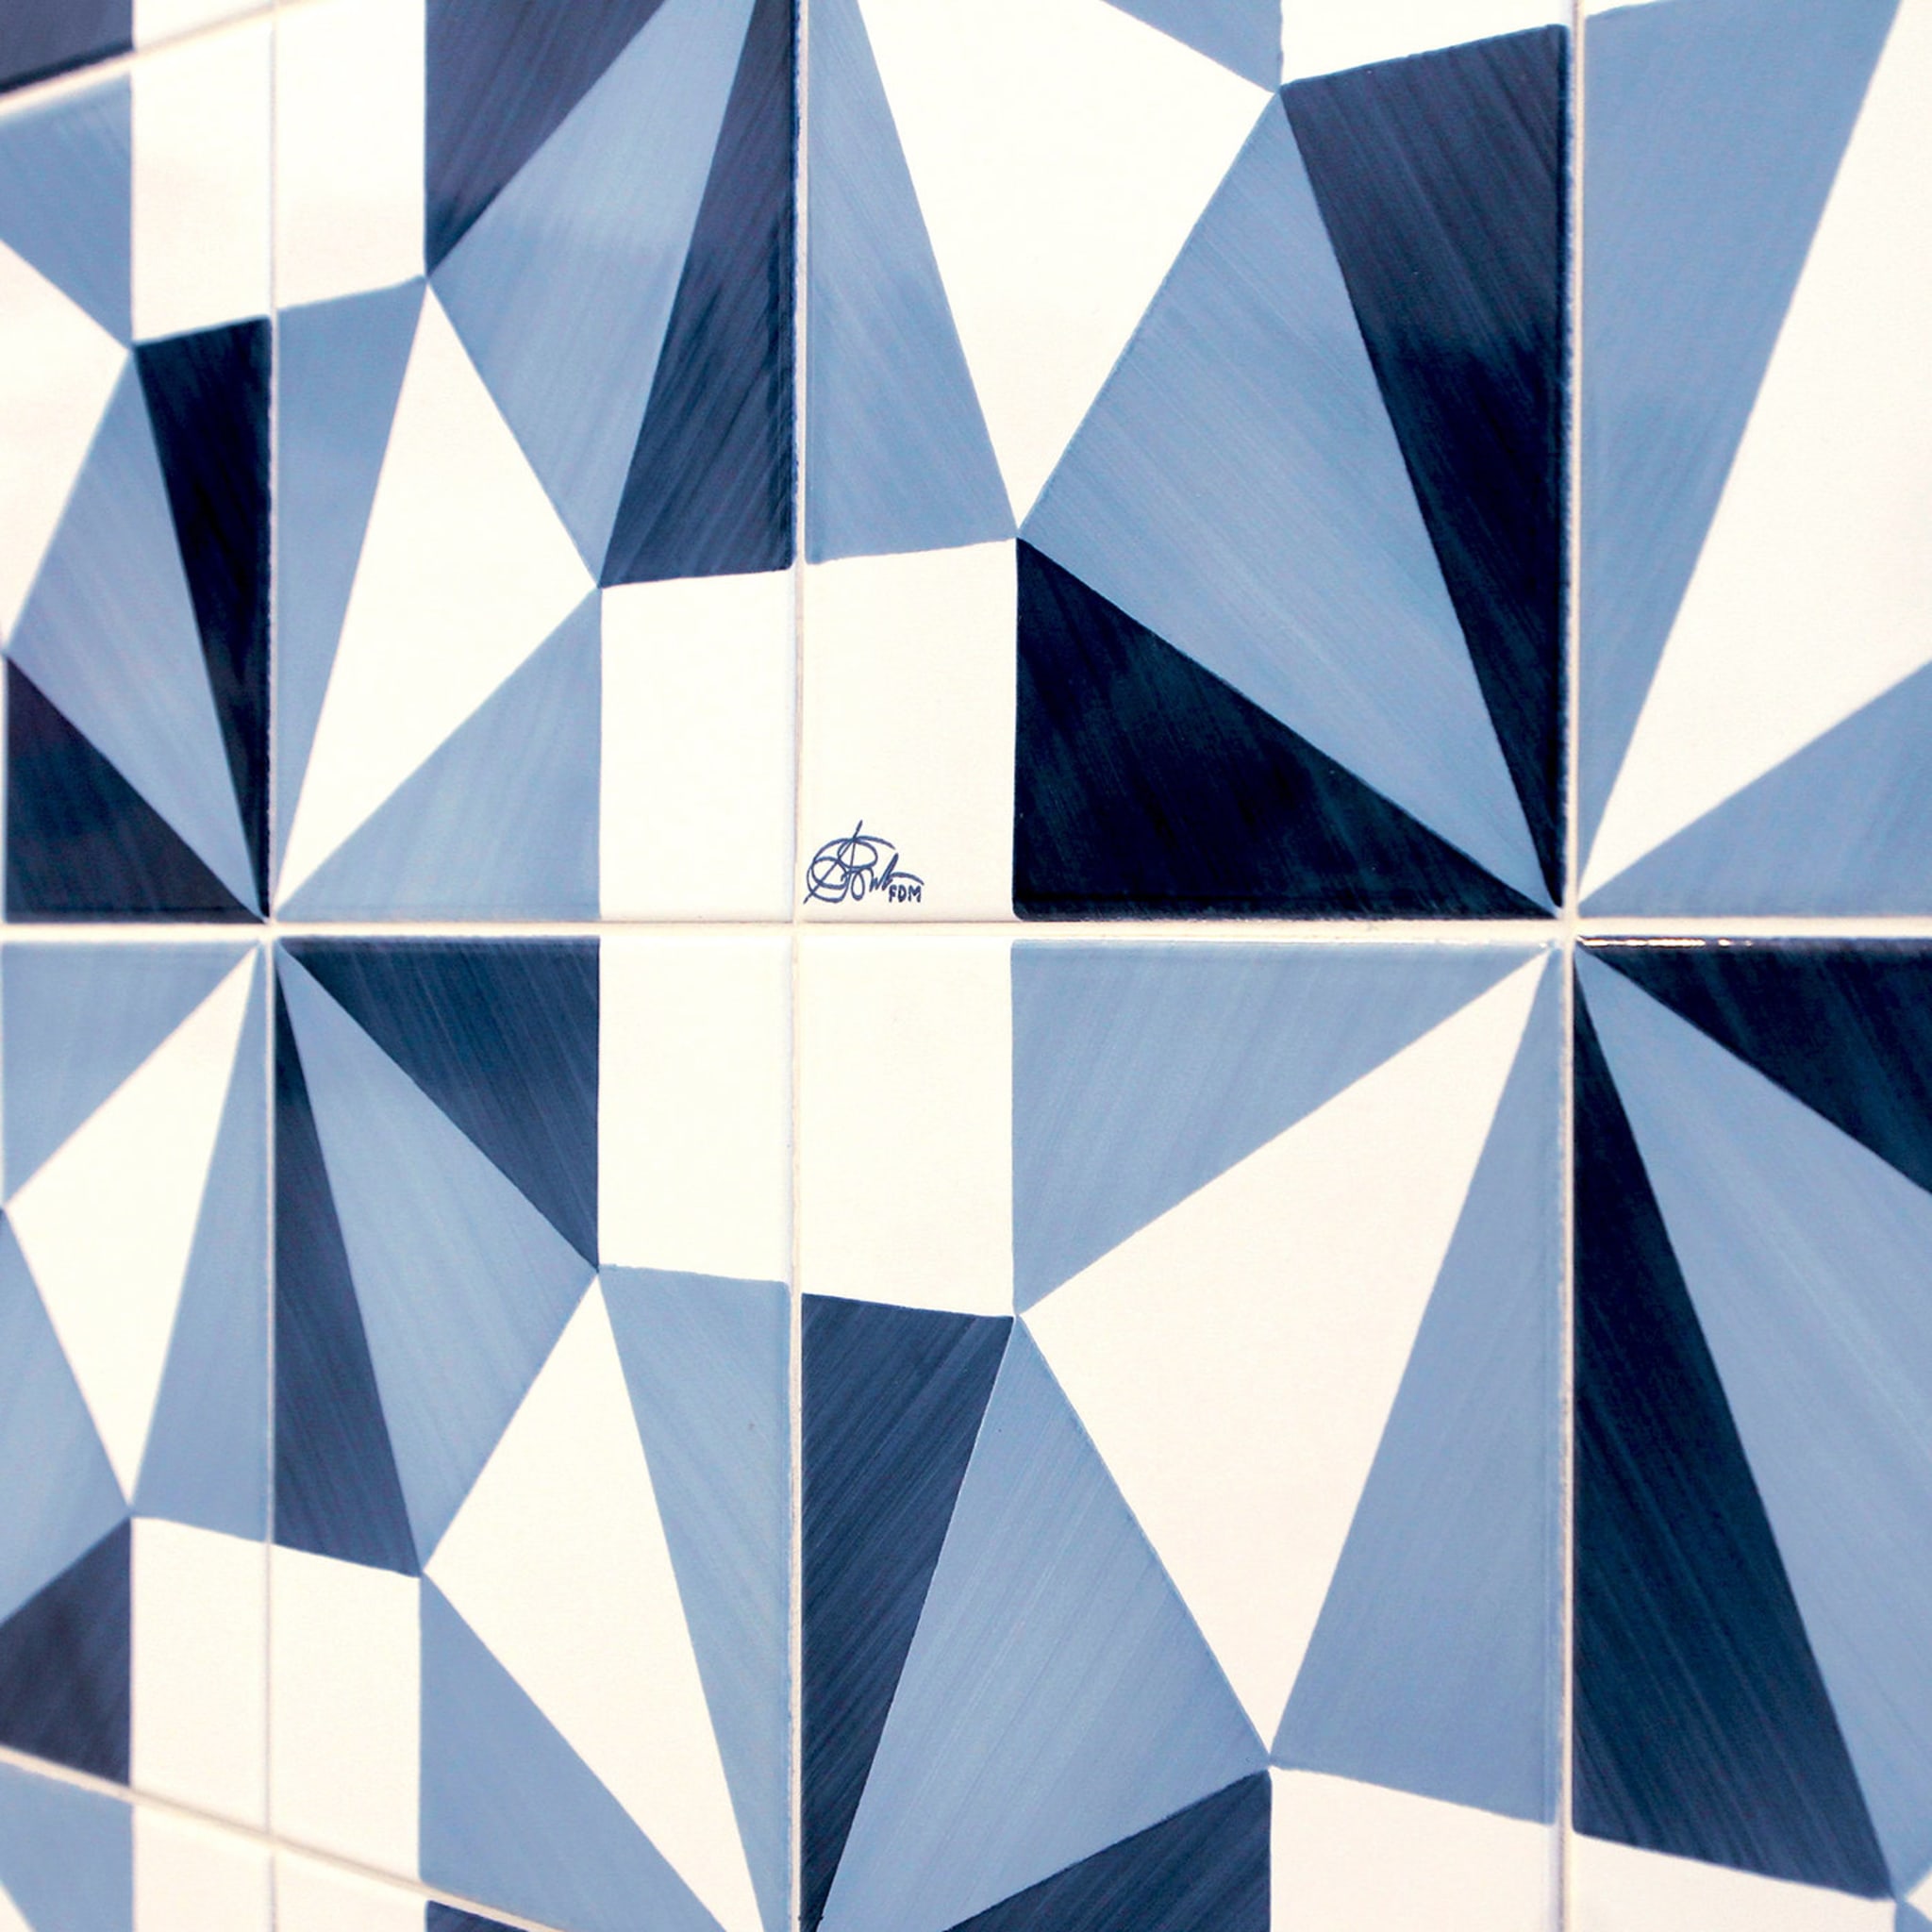 Set of 25 Decoration Type 8 Tiles Blu Ponti Collection by Gio Ponti - Alternative view 5